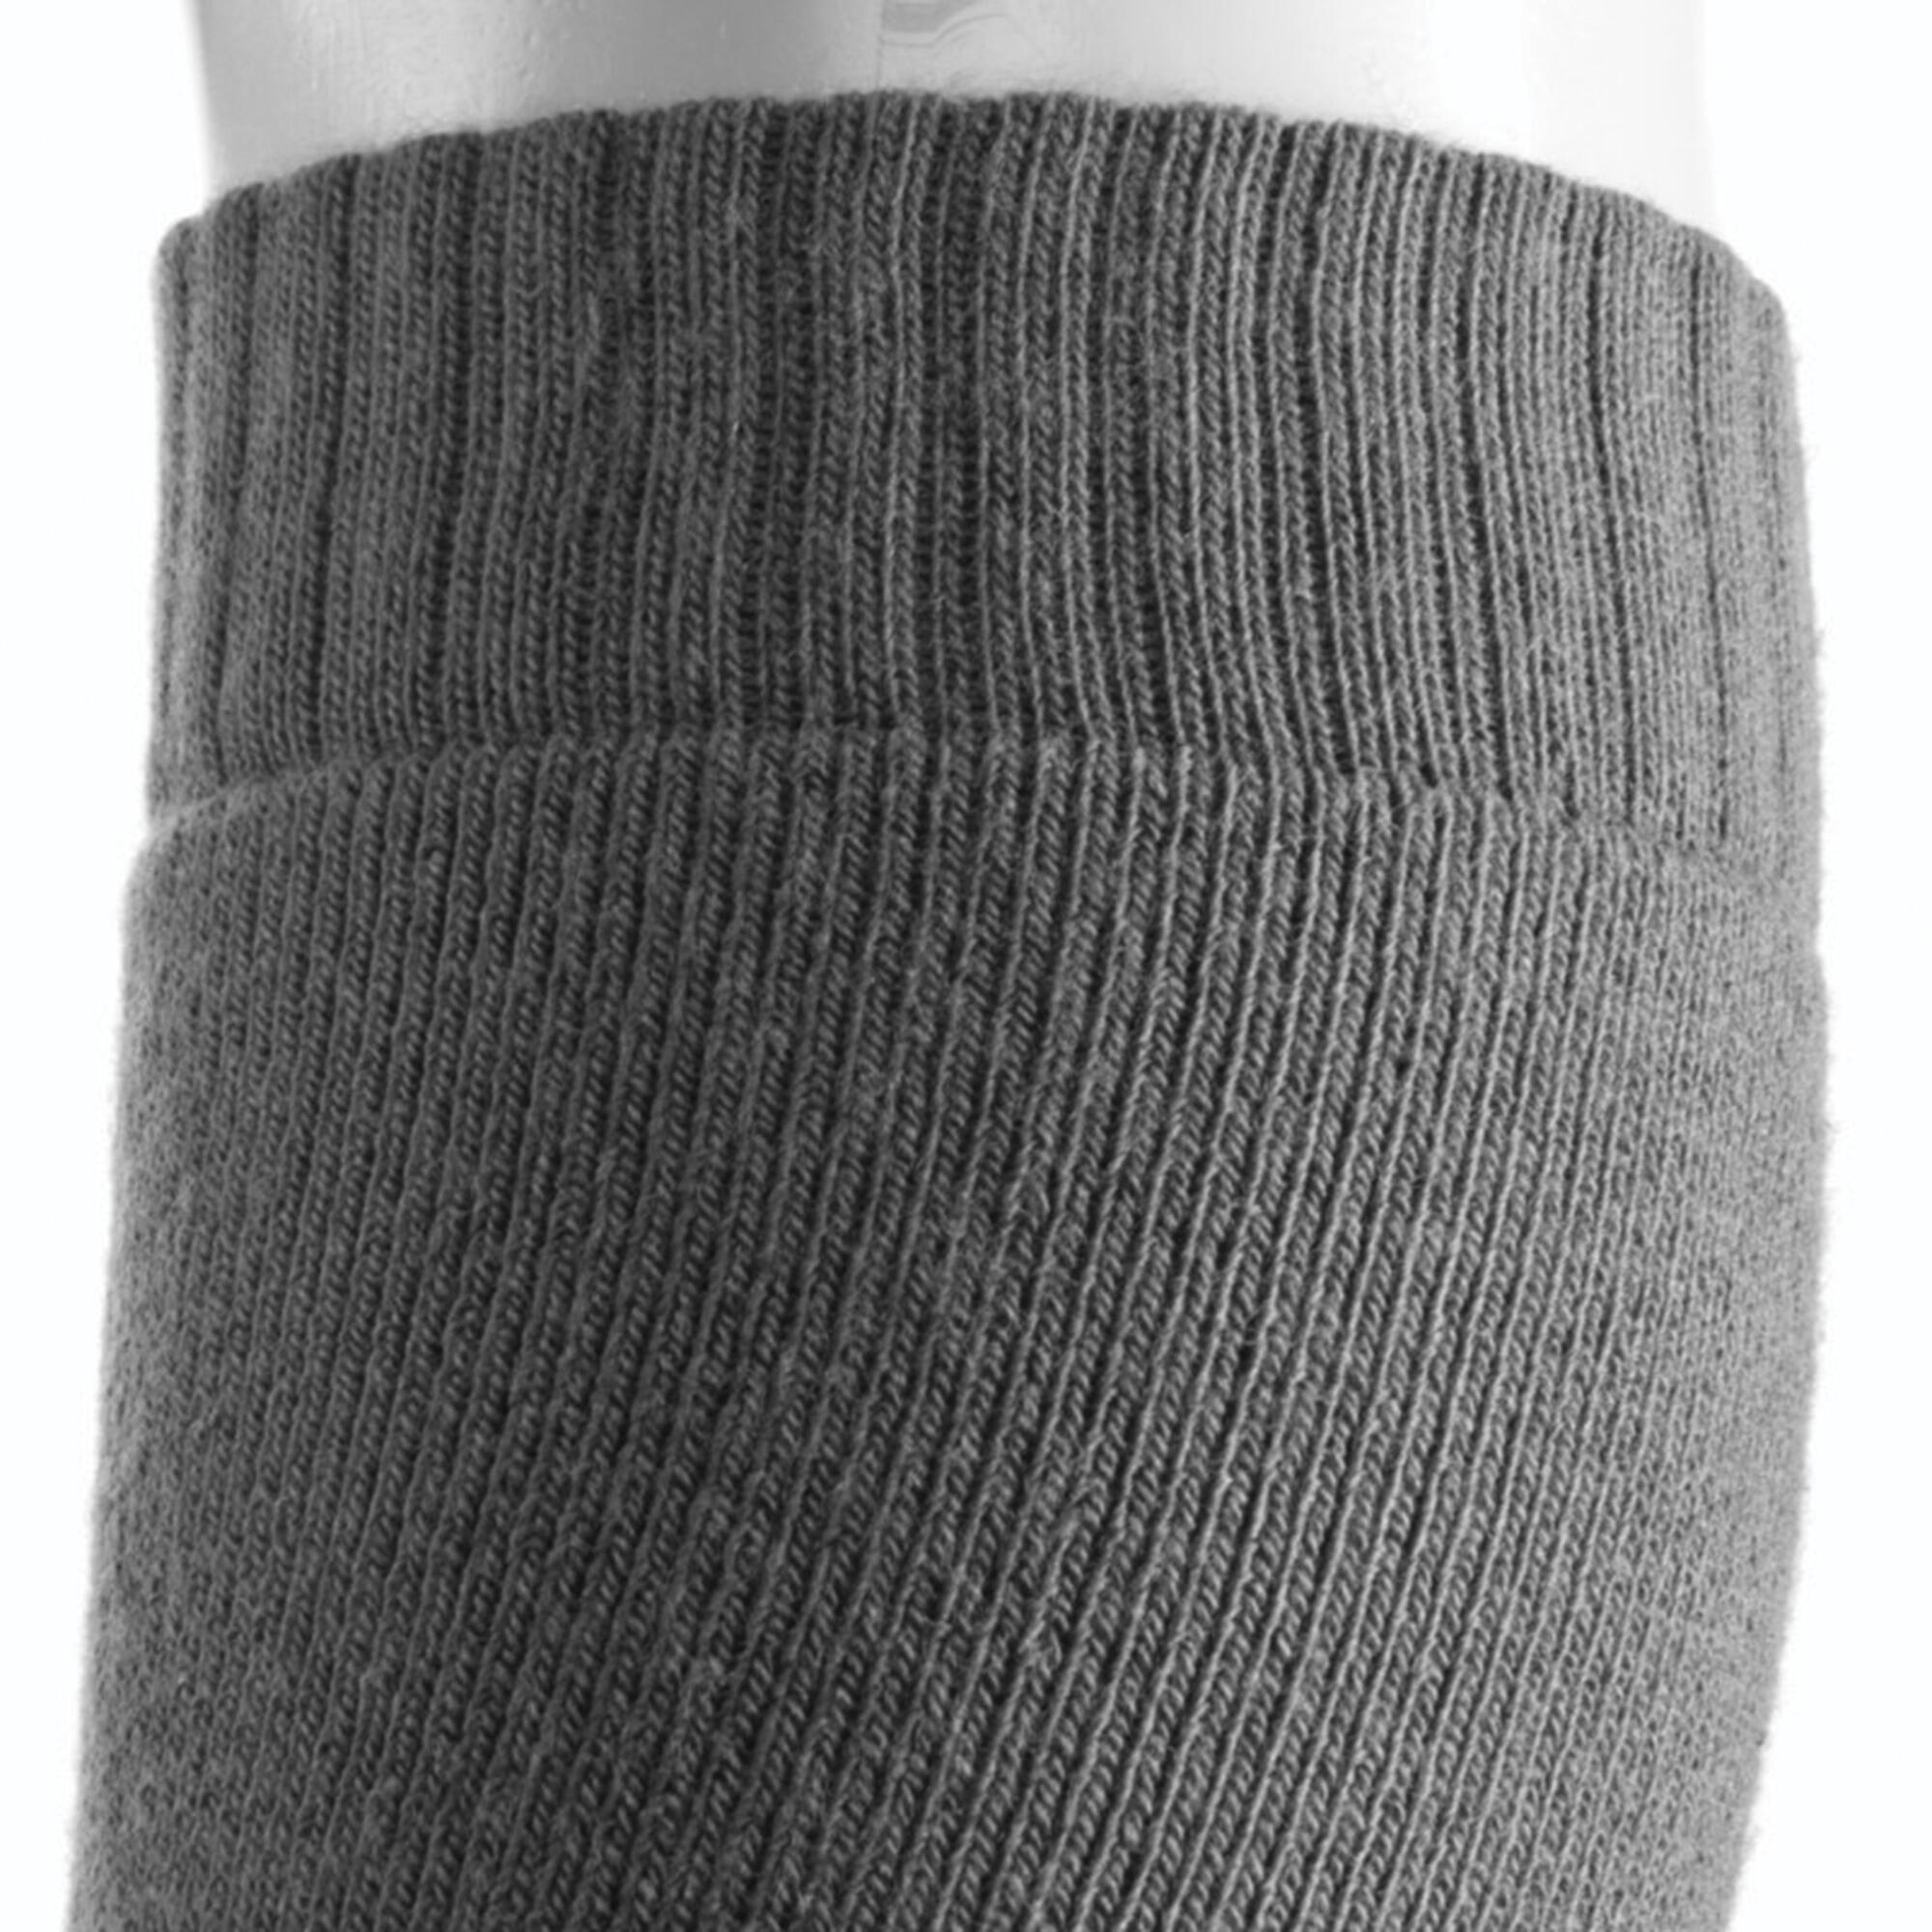 Wedze First Heat Adult Ski Socks - Grey 4/4